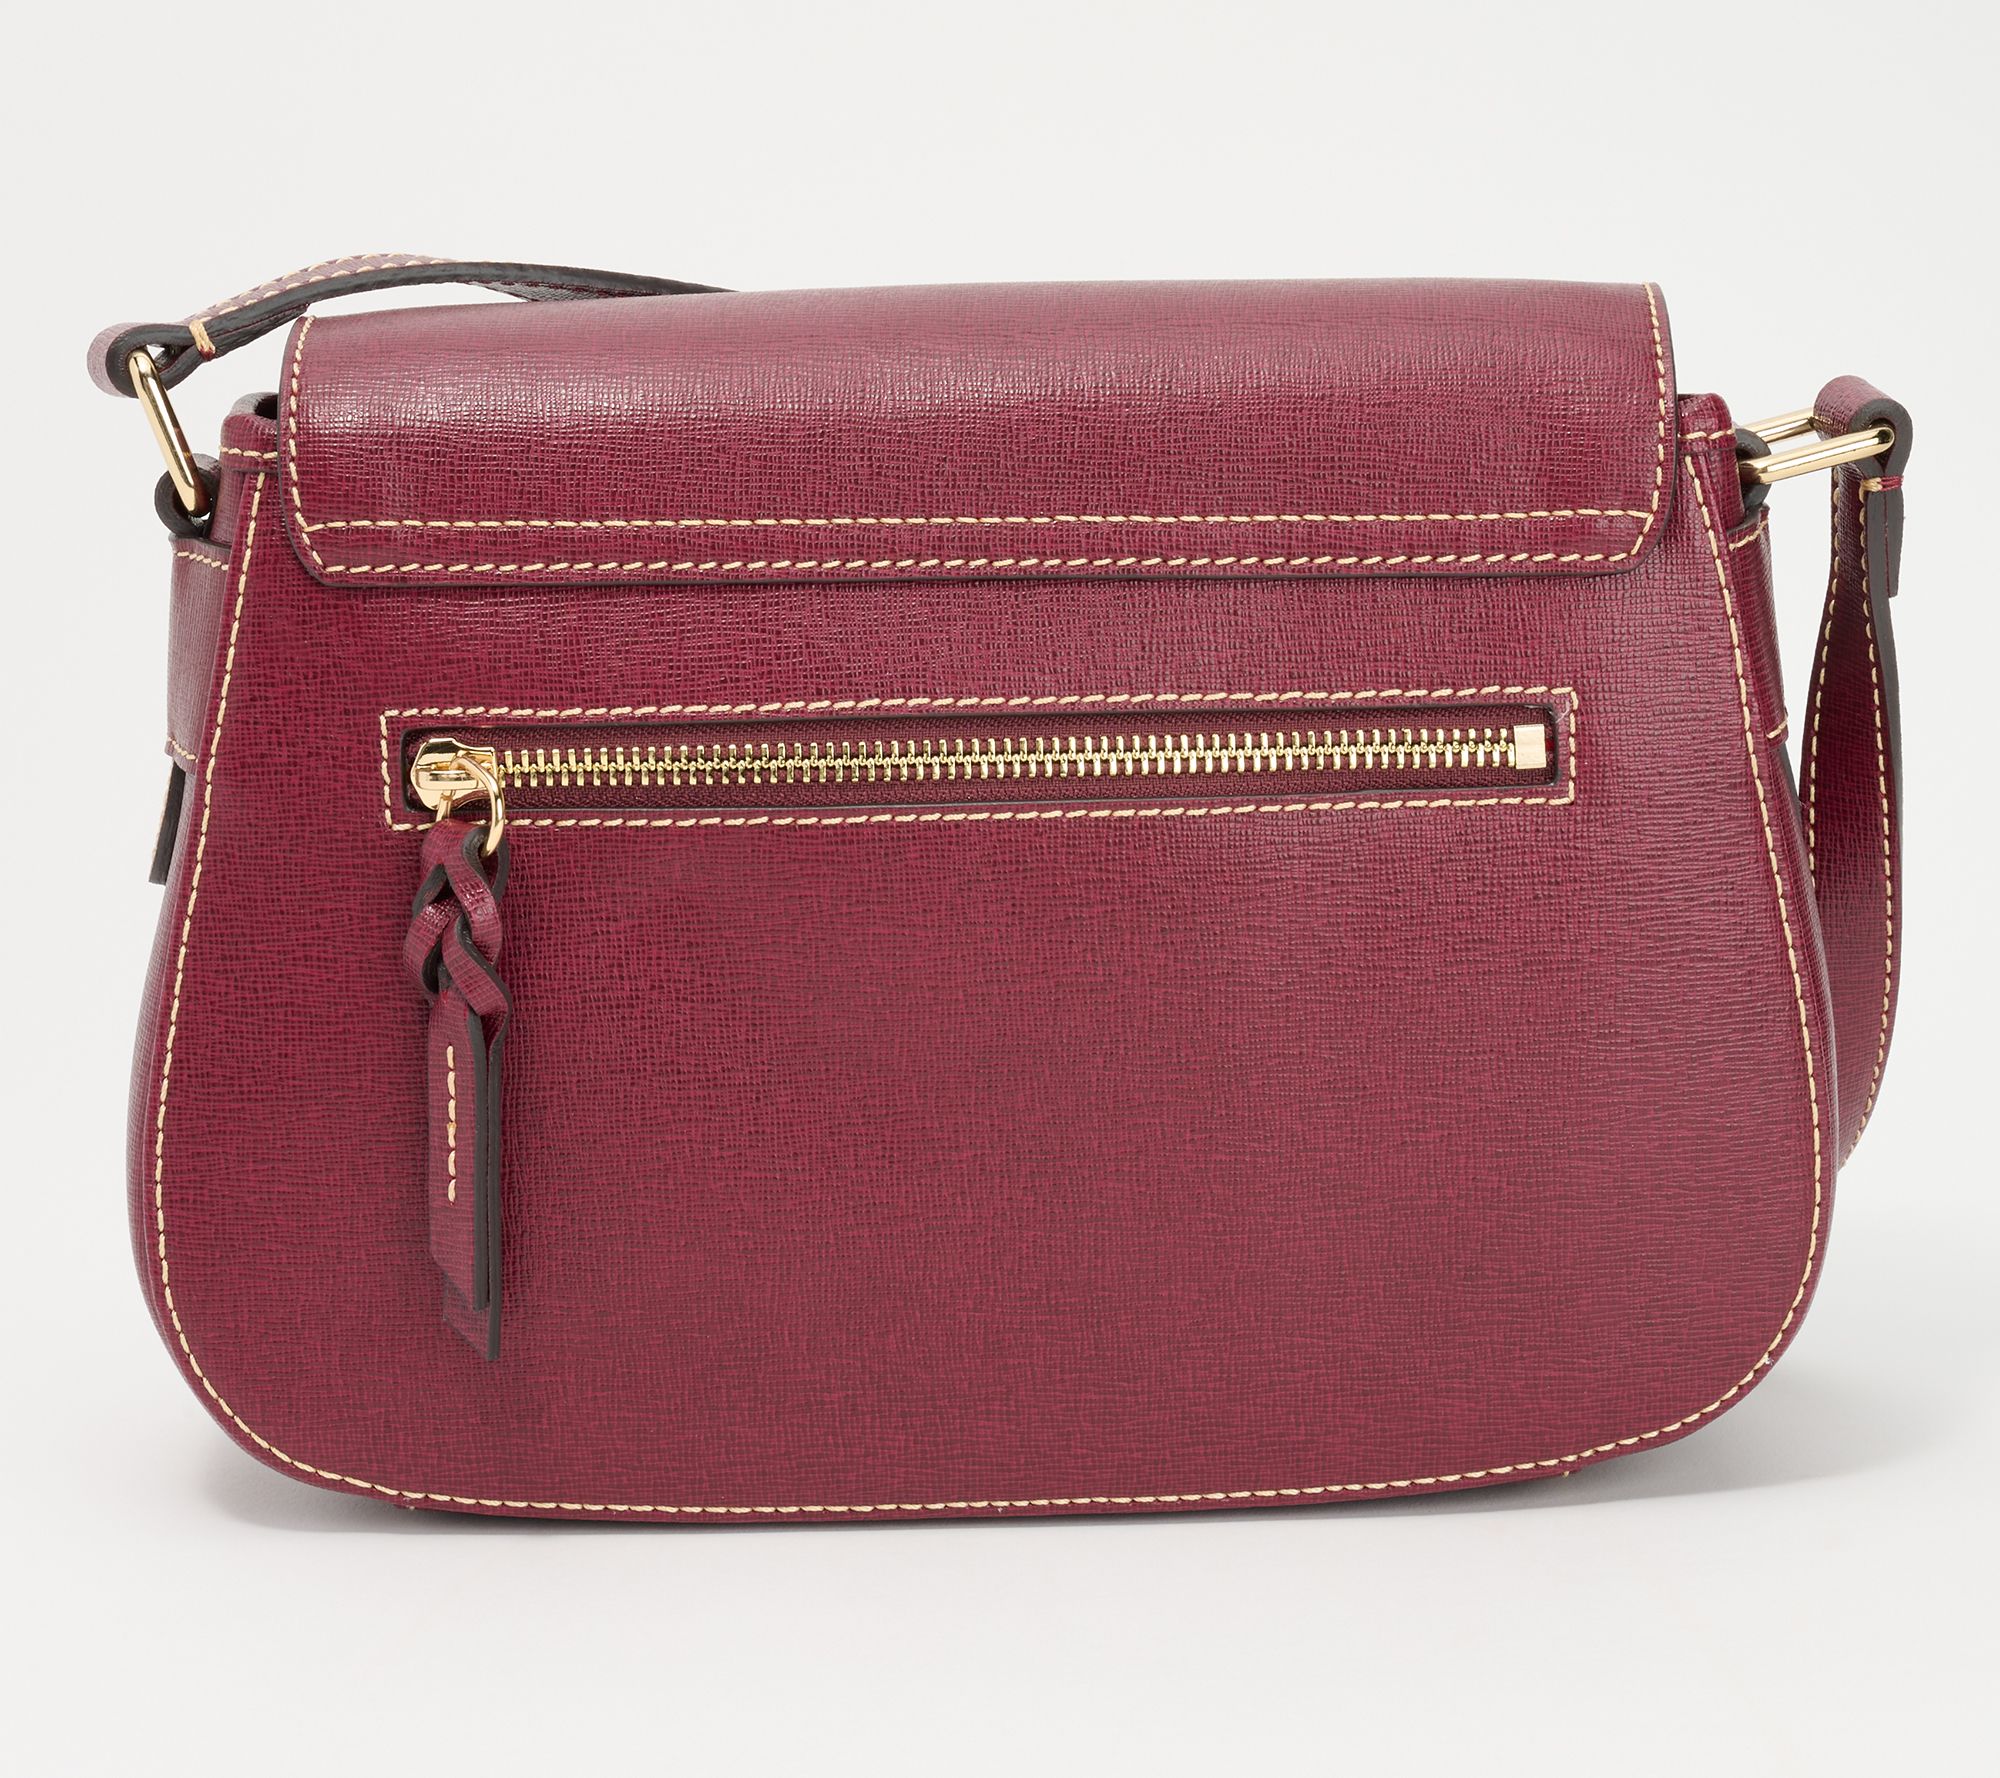 Radley London Burgundy Leather Wallet One Size - 75% off